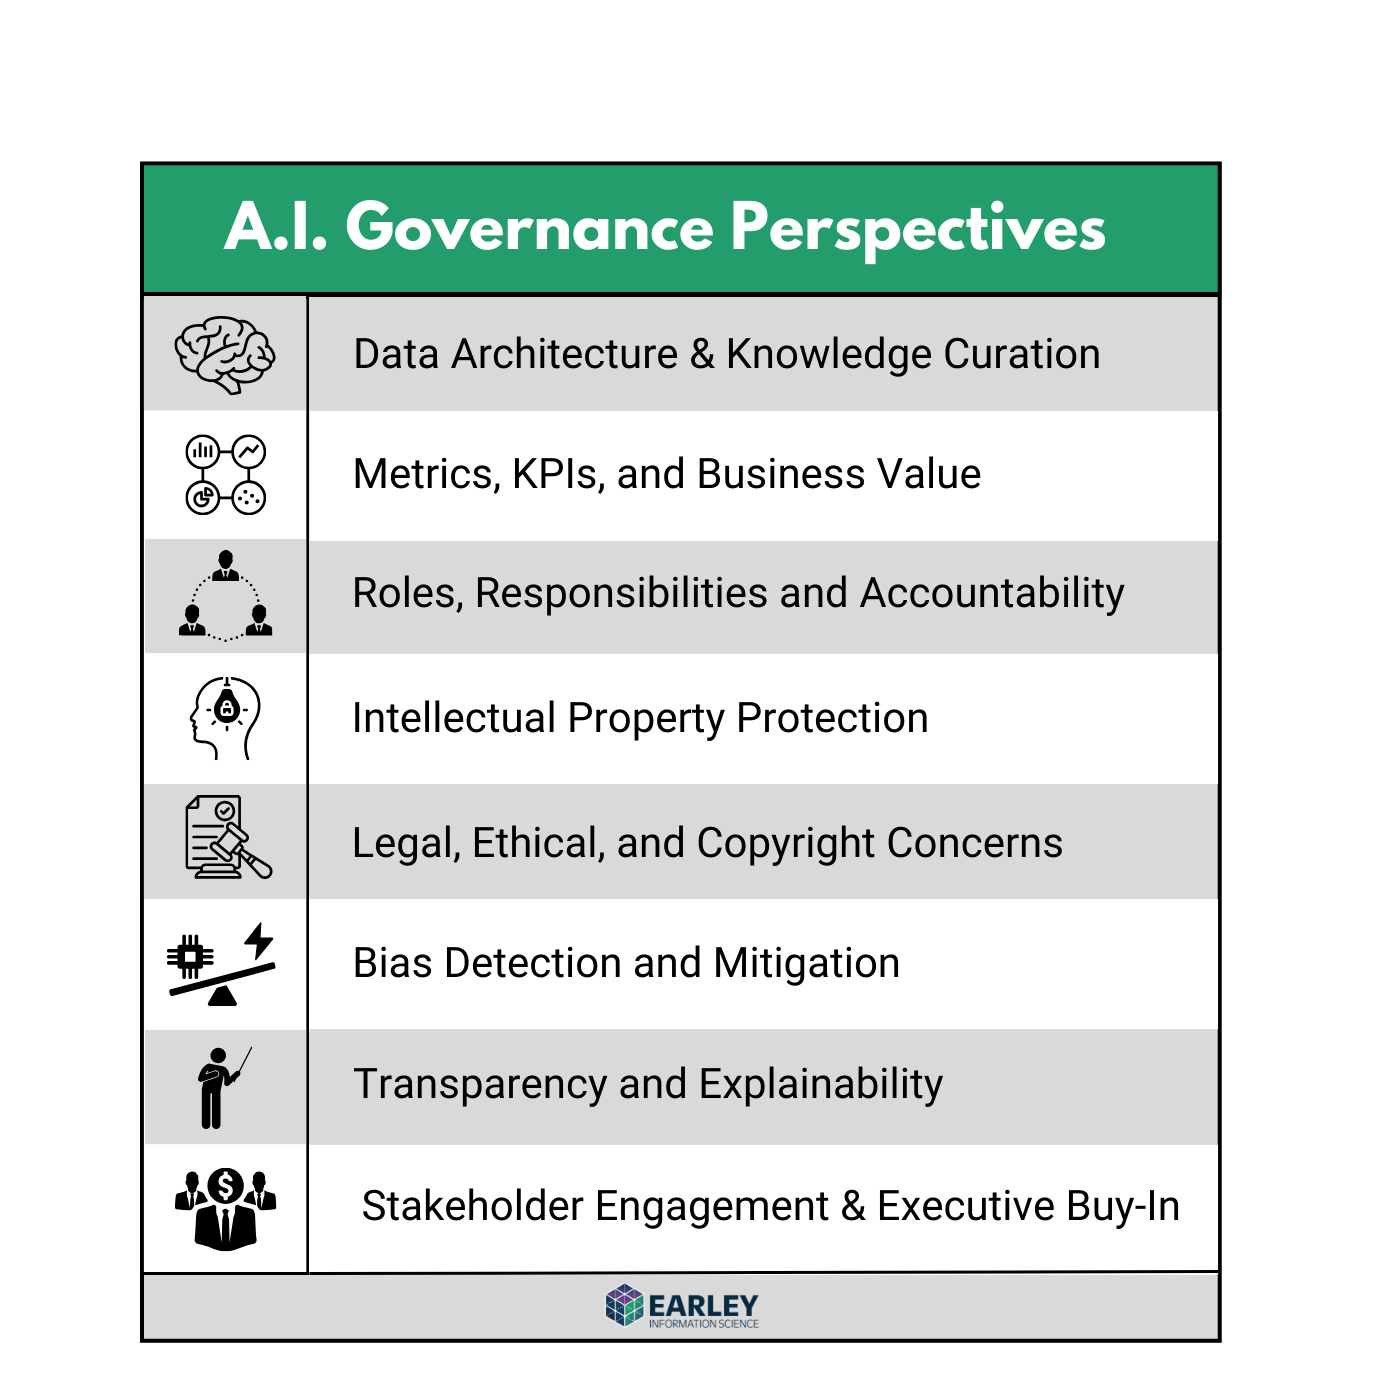 AI Governance Framework